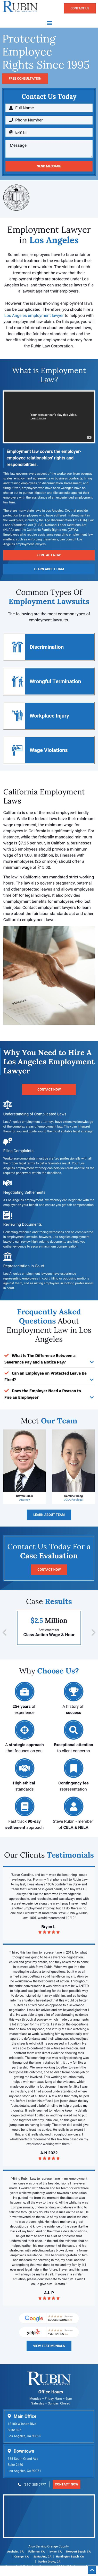 The Rubin Law Corporation - Los Angeles CA Lawyers